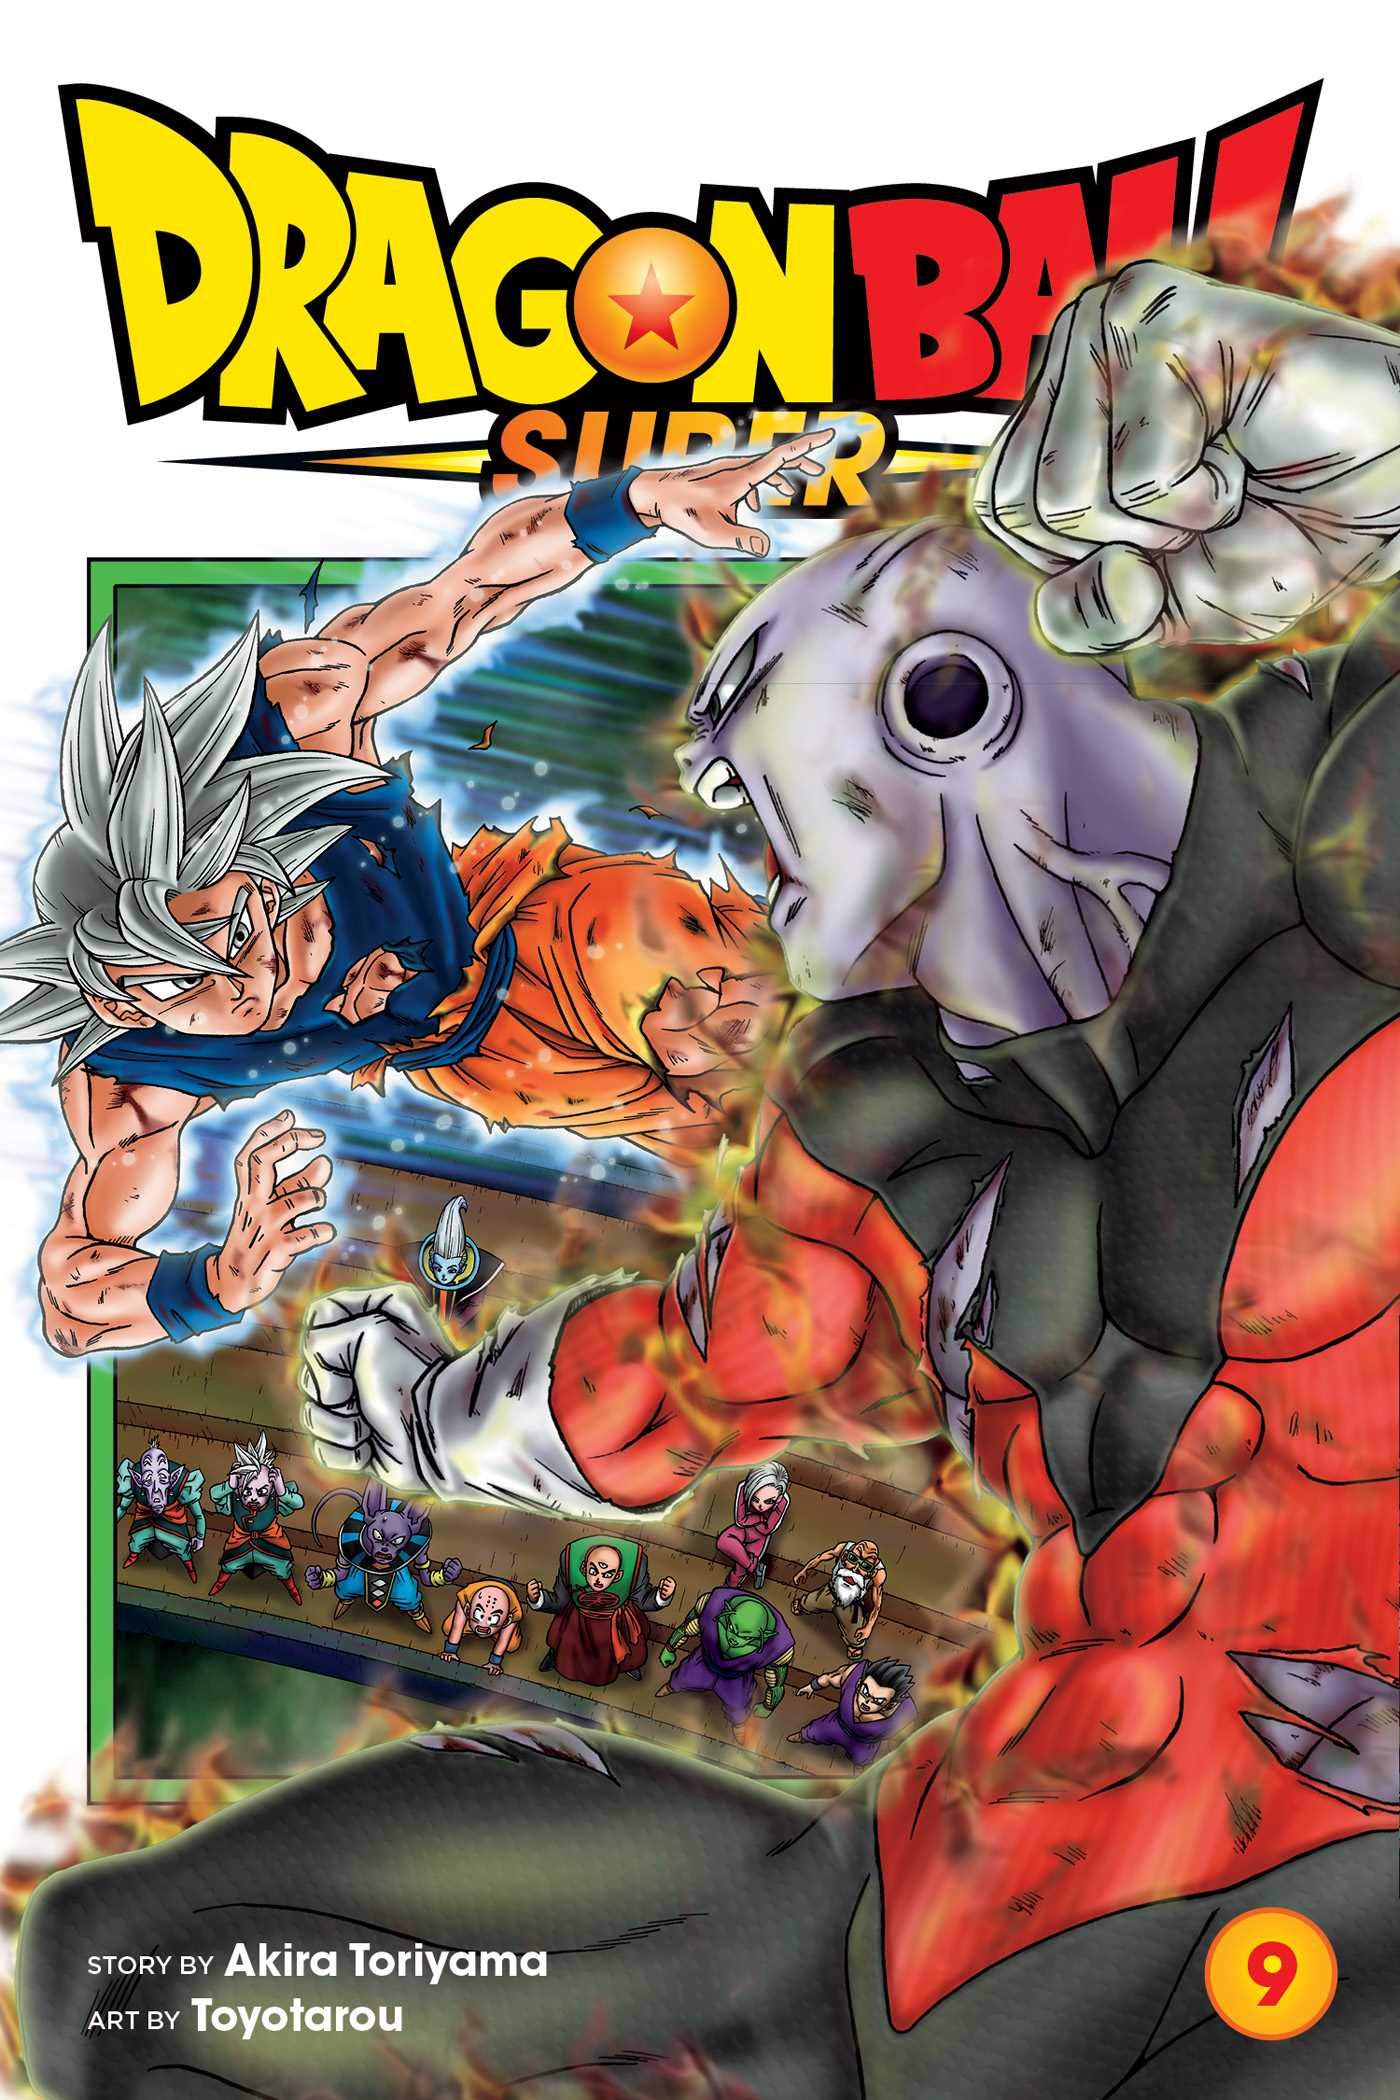 Viz Releasing "Dragon Ball Super" English Translation Collected Edition Volume 9 in June 2020